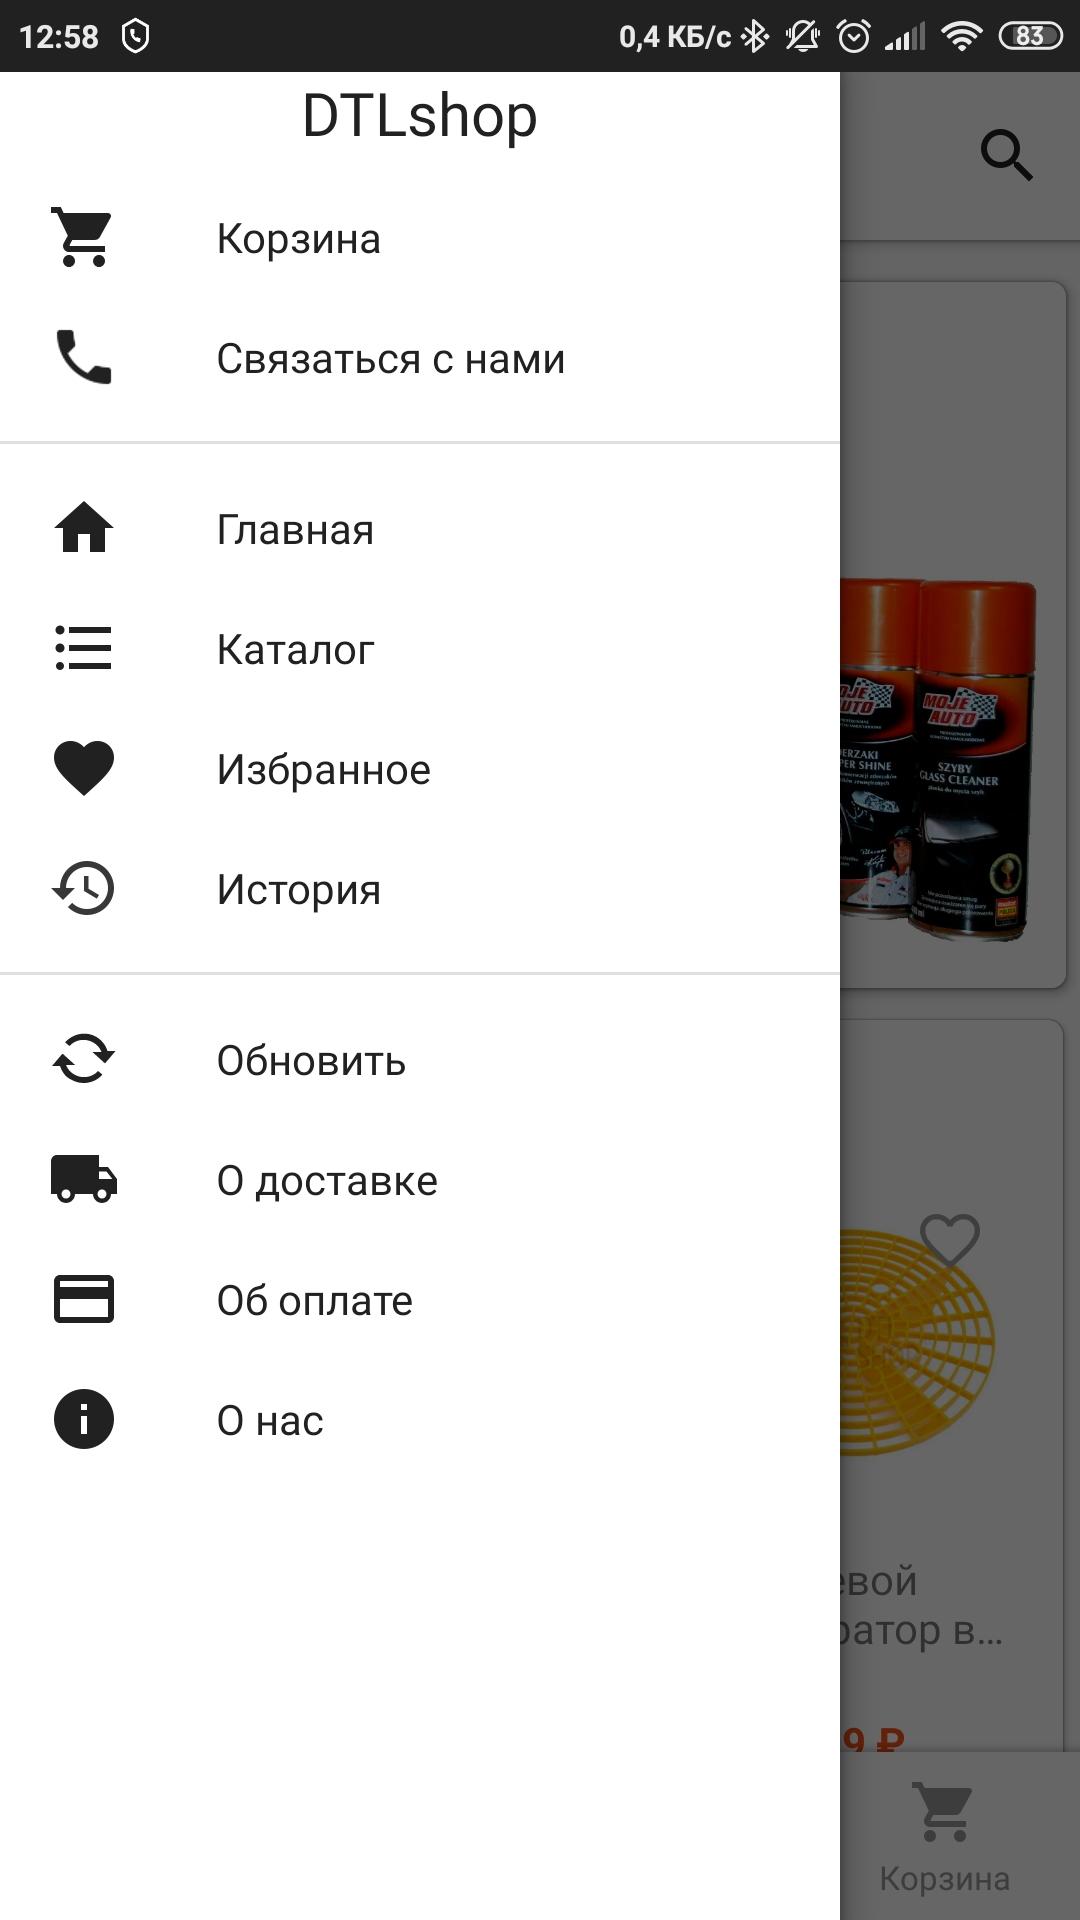 DTLshop.ru - detaling market 4.177.A.0 Screenshot 16